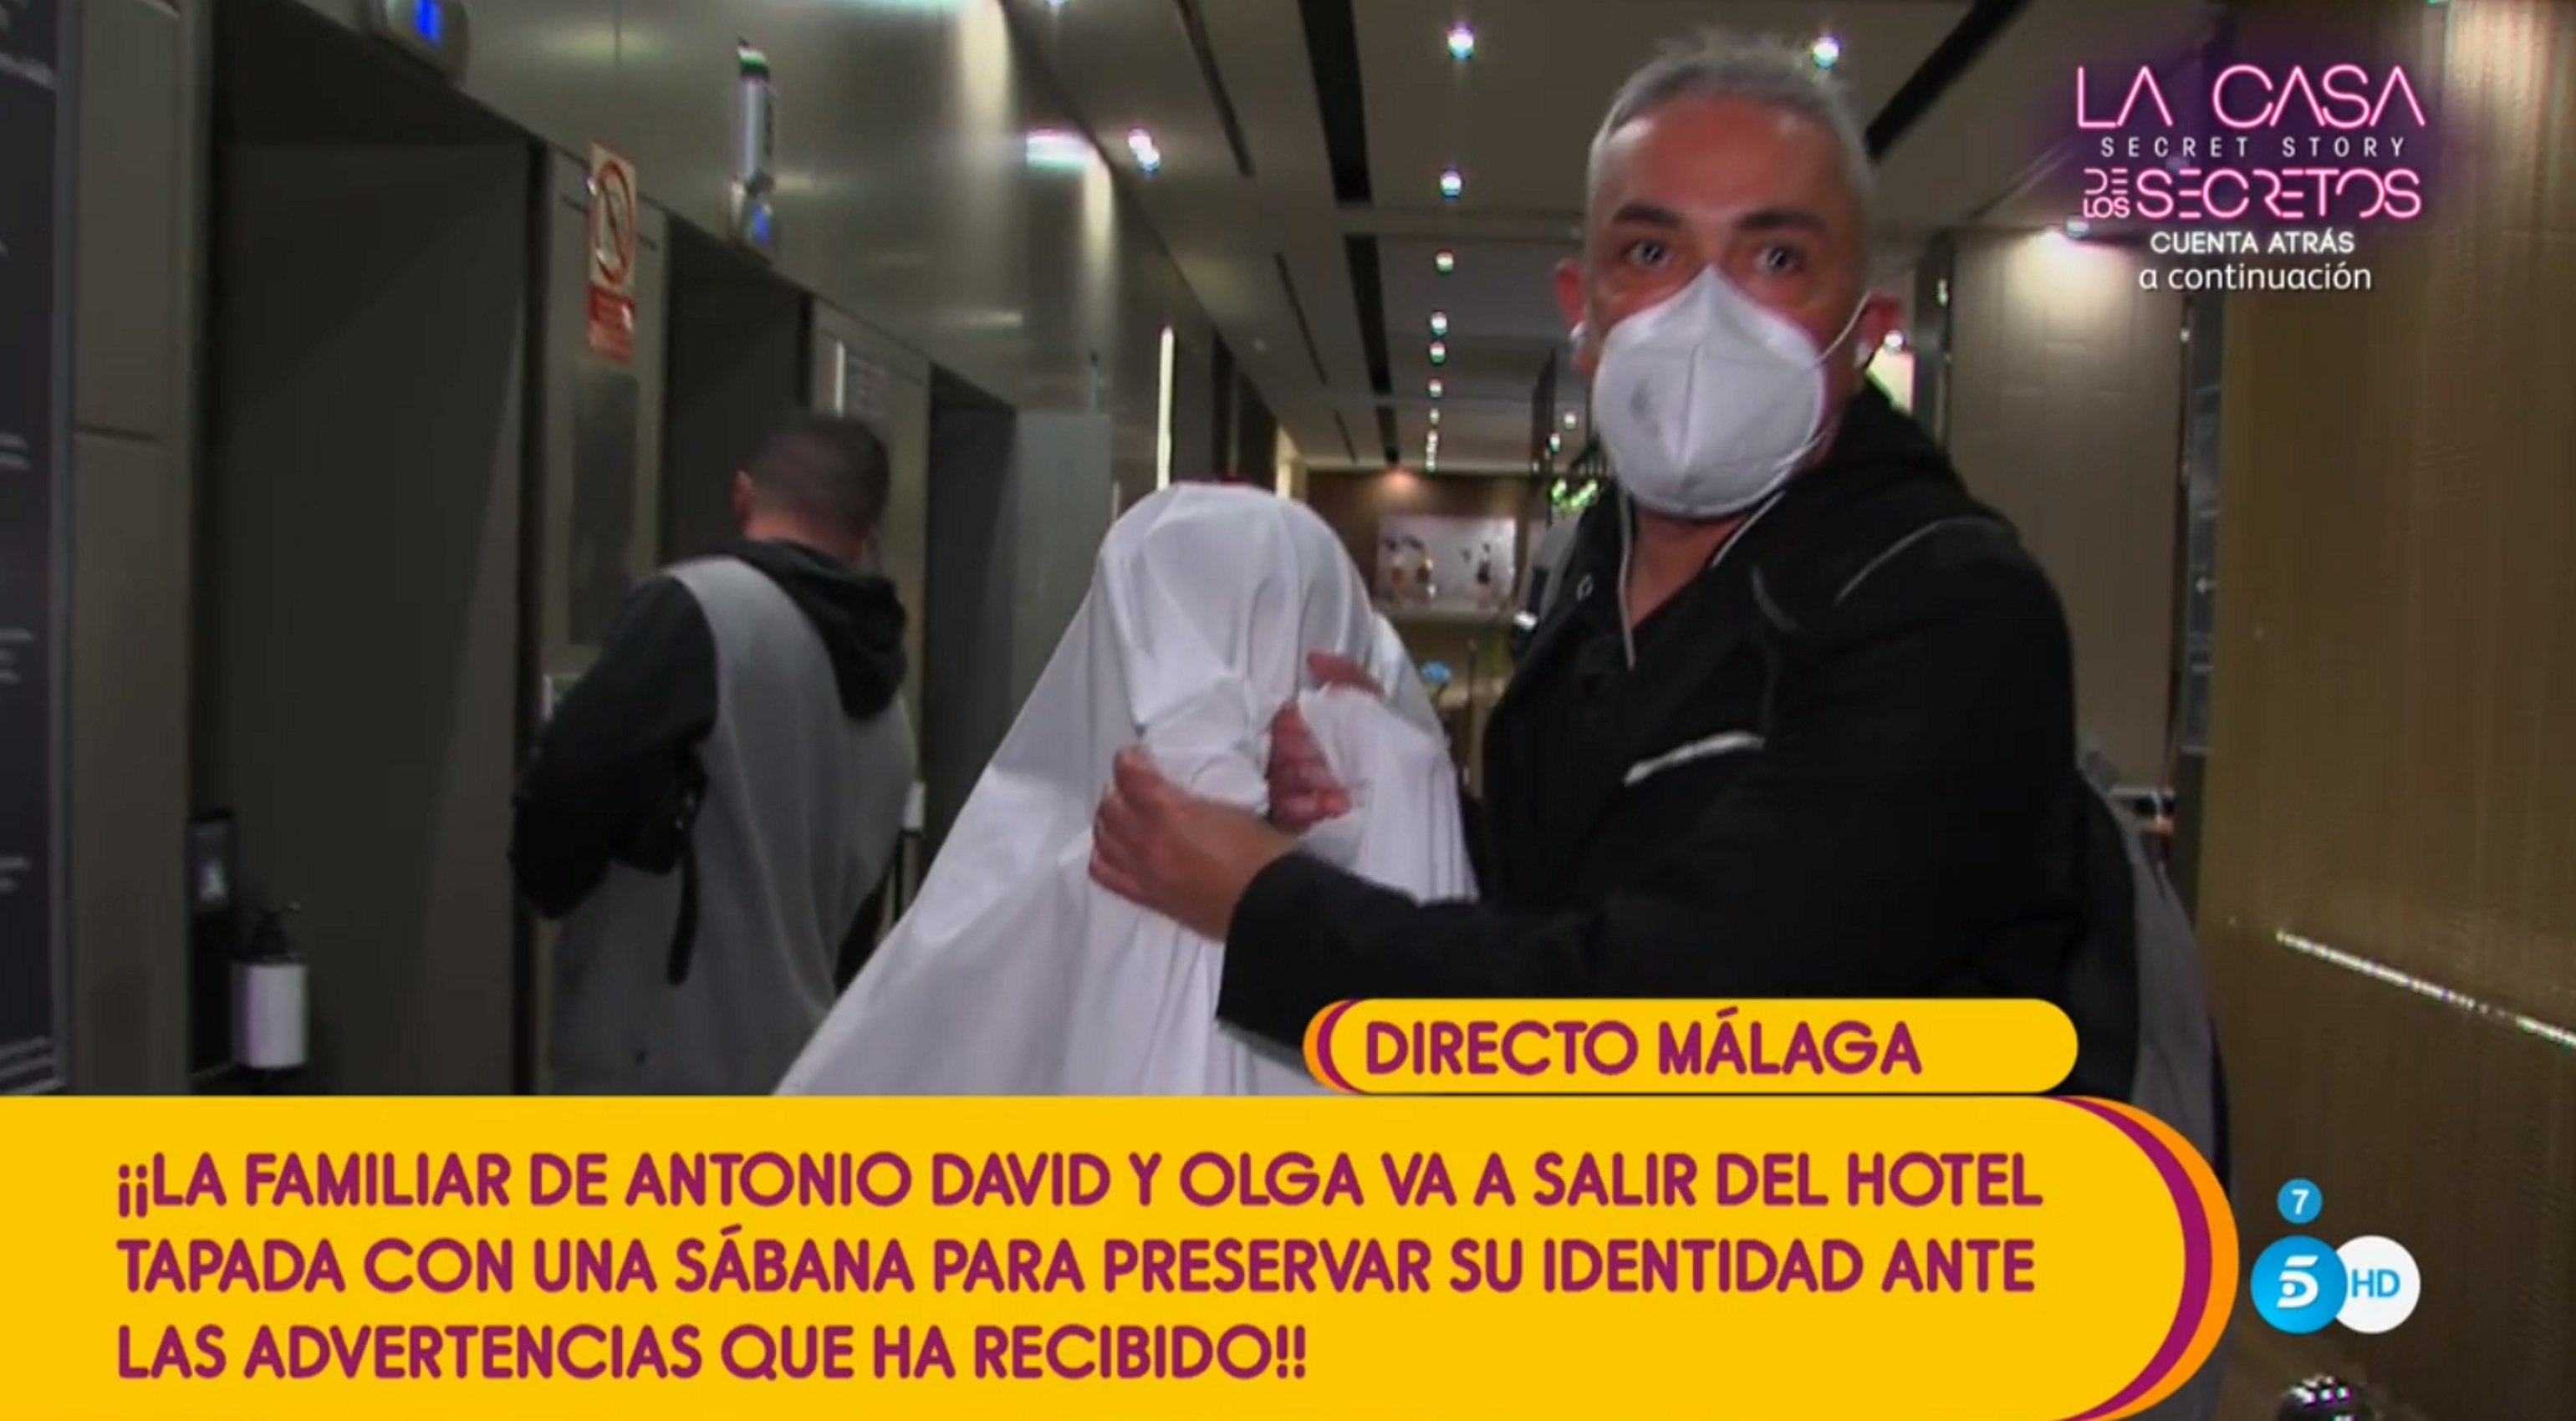 Terror a 'Sálvame': testimoni contra Antonio David evacuada sota un llençol